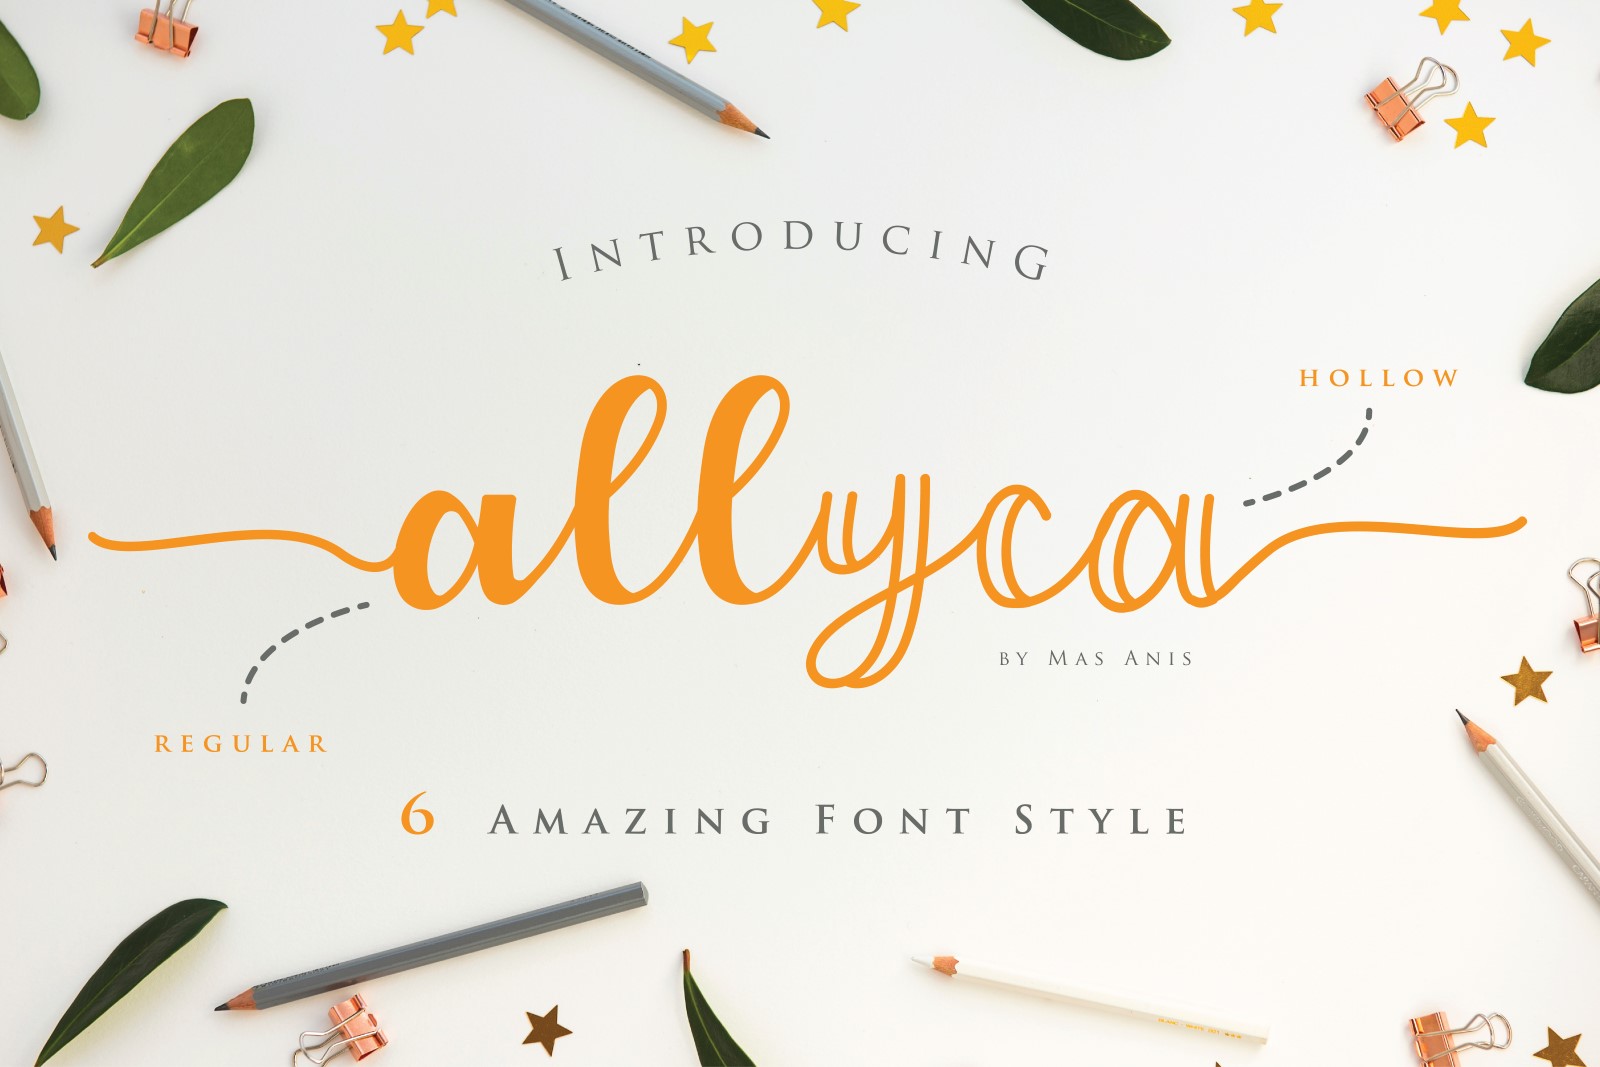 Allyca Font